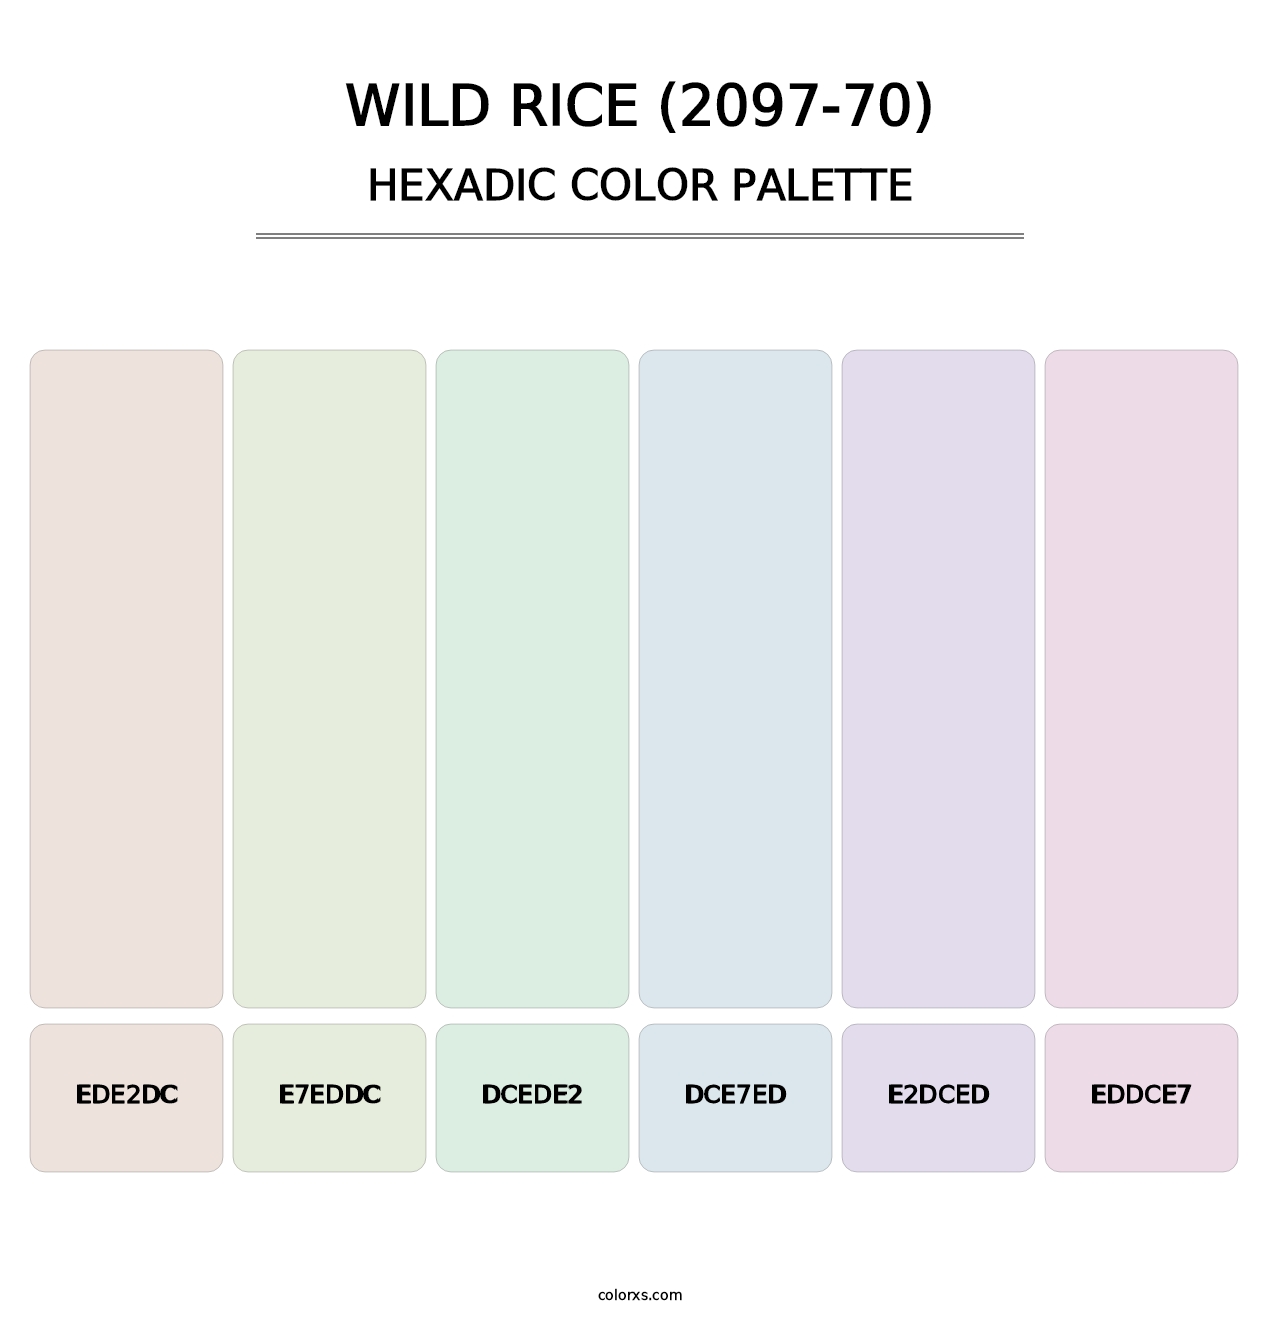 Wild Rice (2097-70) - Hexadic Color Palette